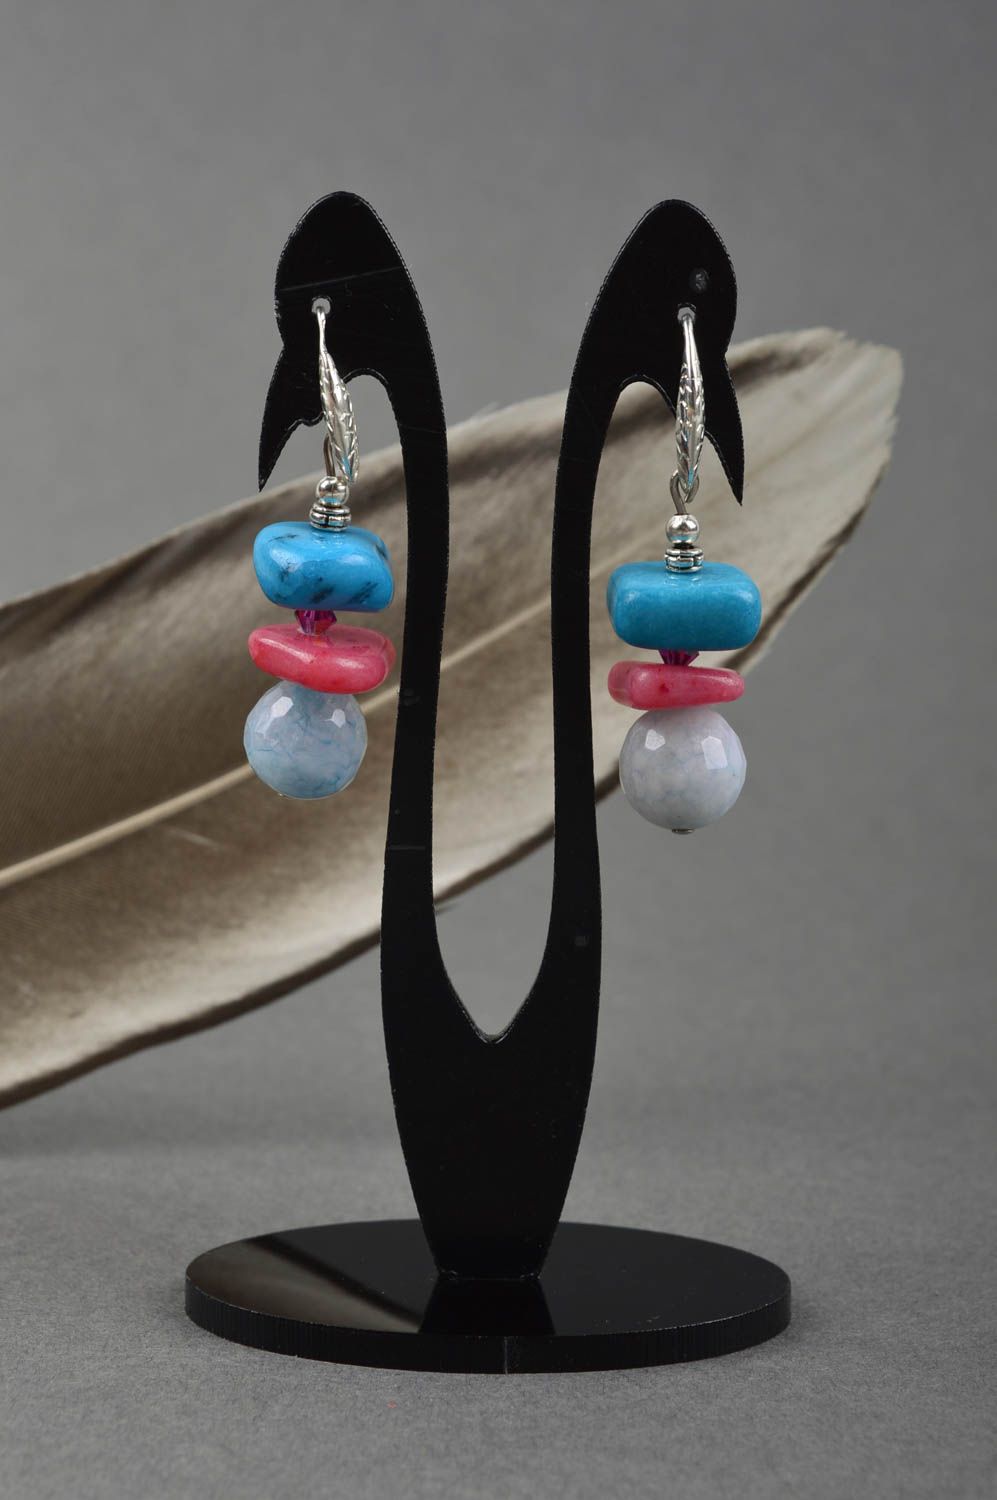 Handmade earrings with agate pendants designer women accessory idea for gift photo 1